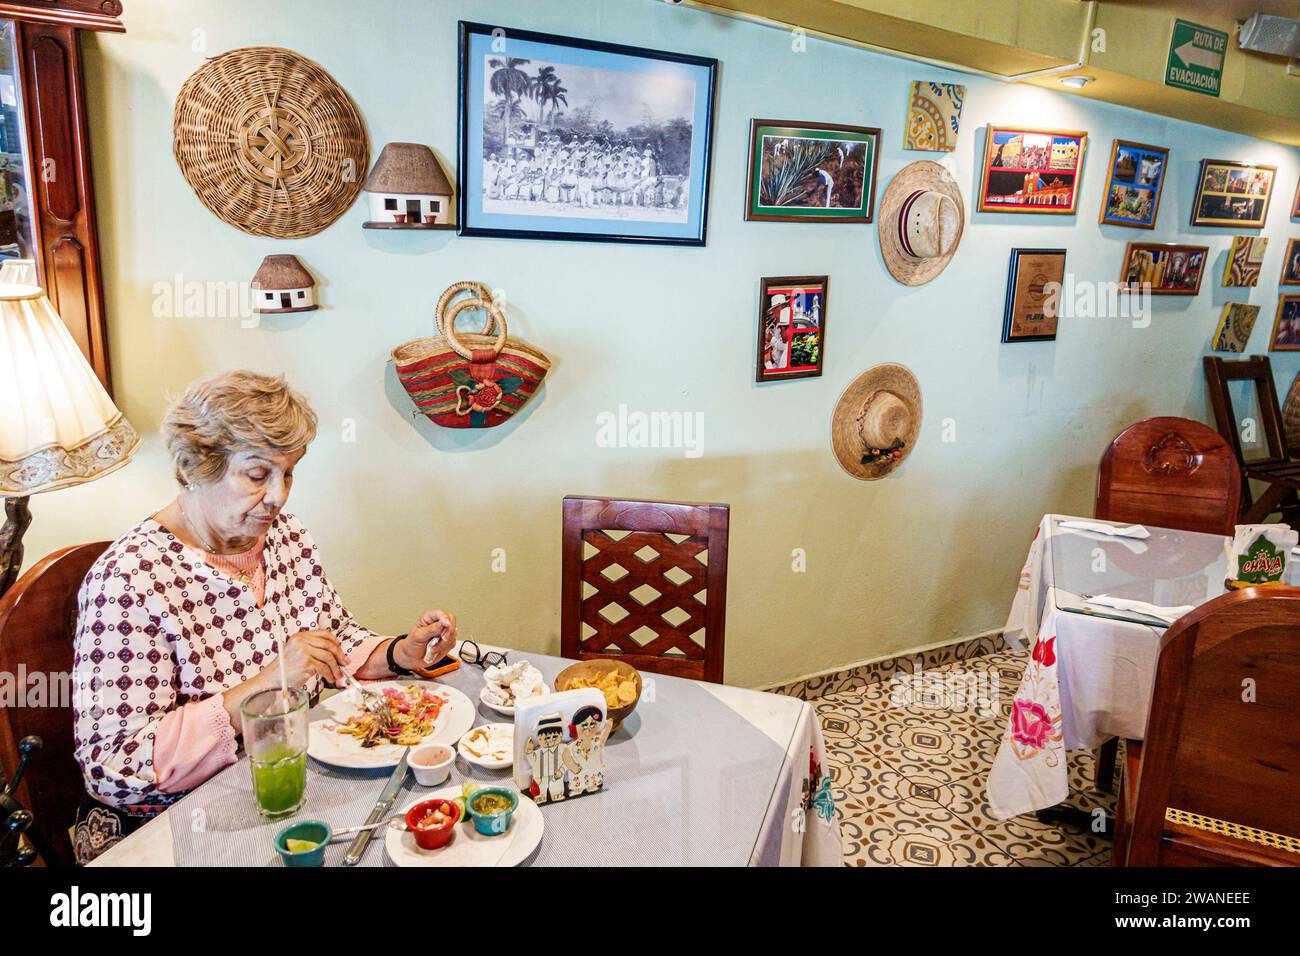 Merida Mexico,centro historico central historic district,tables chairs,single alone,La Chaya Maya,Yucateca food,woman women lady female,adult,resident Stock Photo